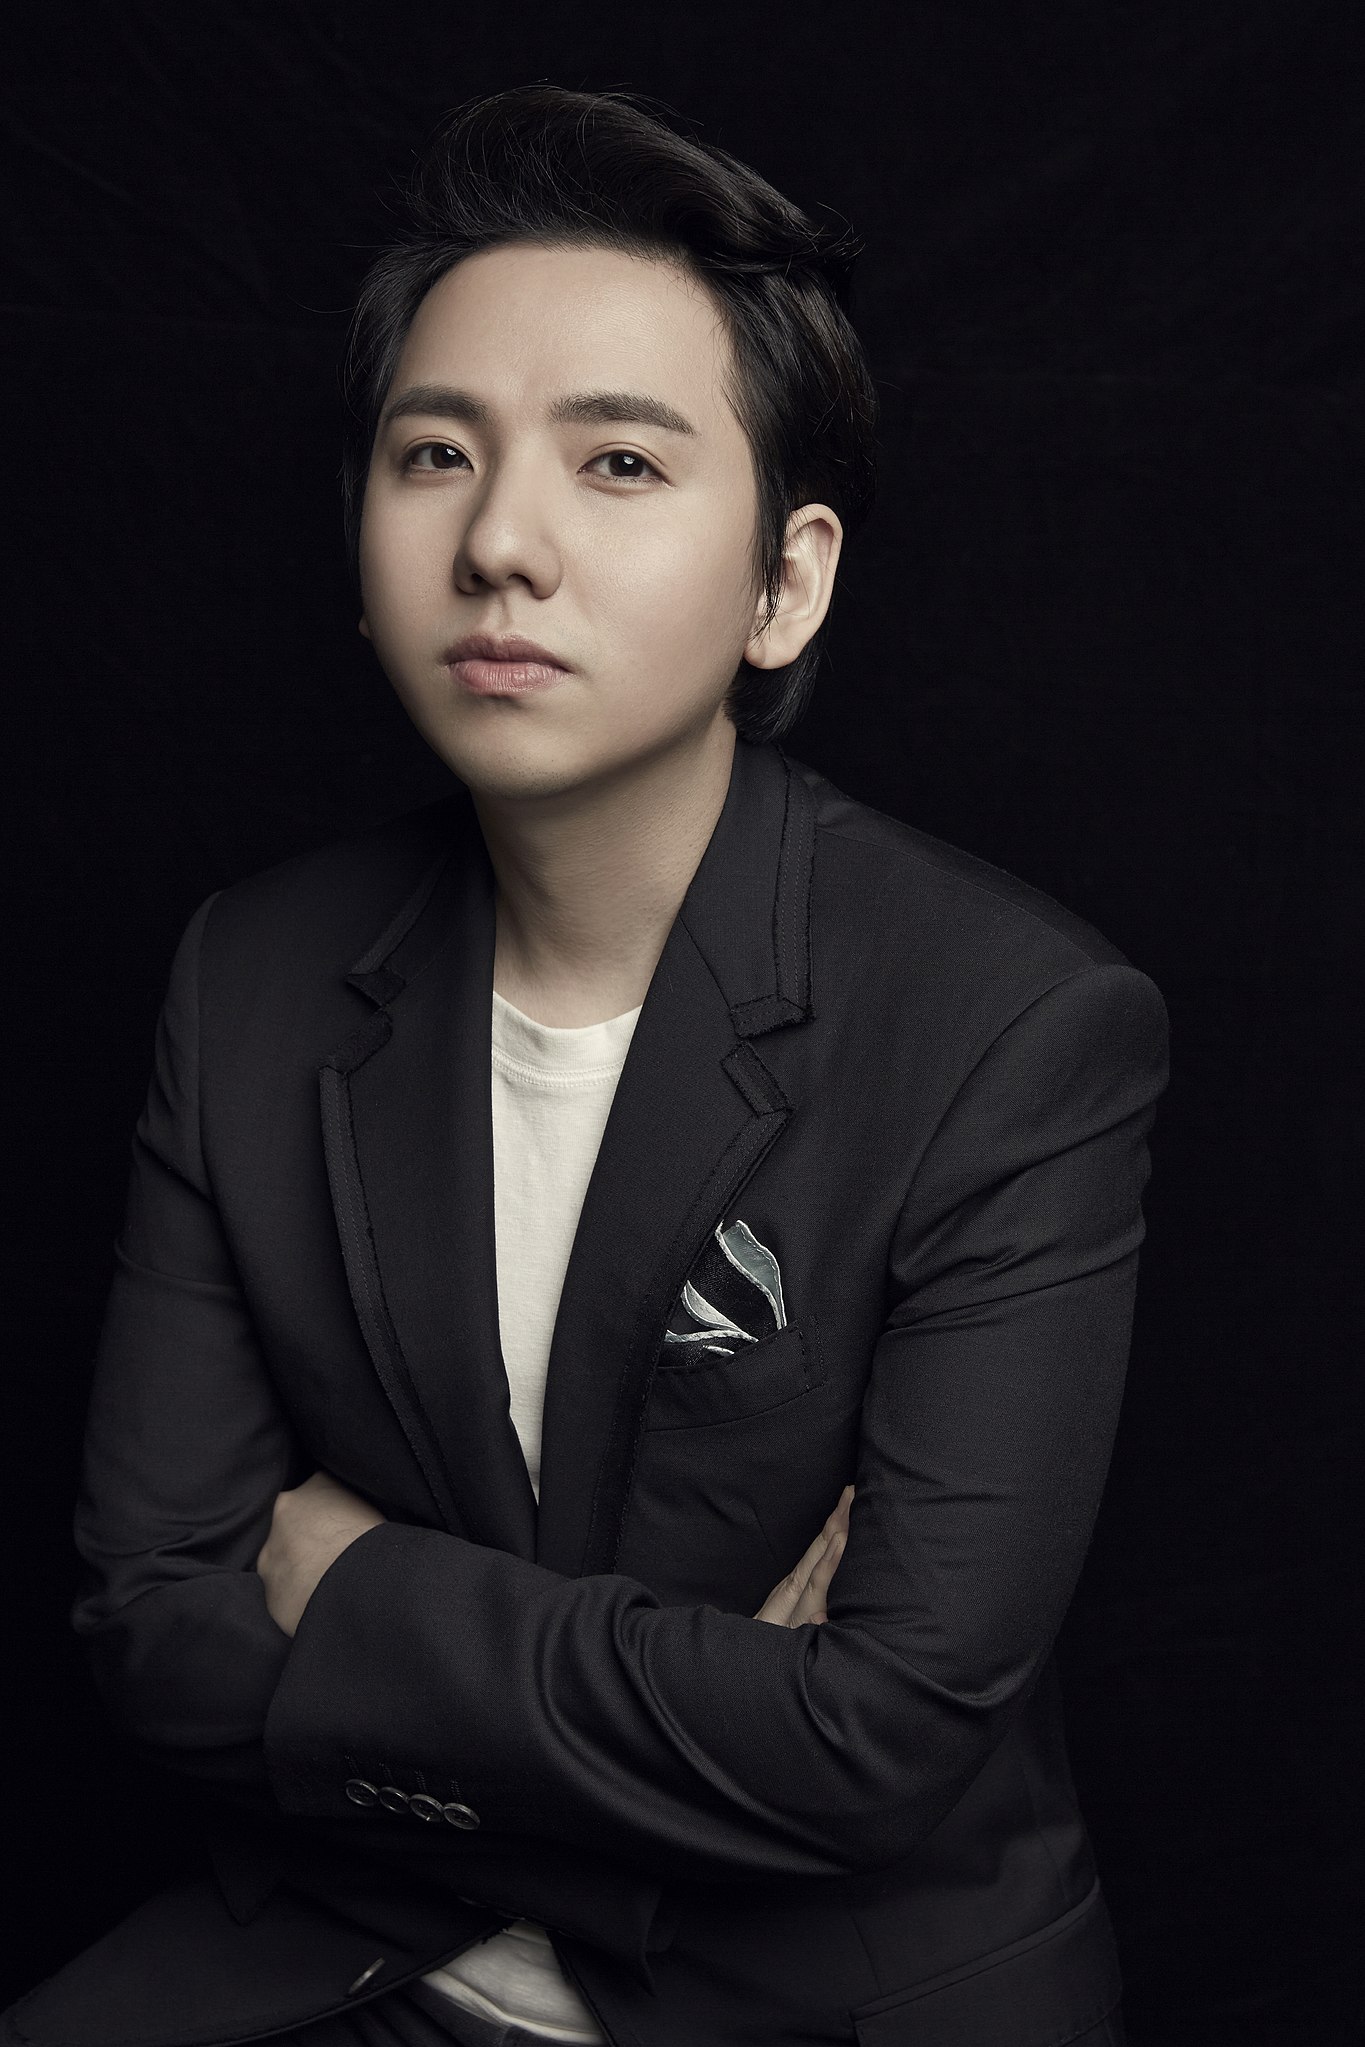 ファイル:South Korean Popera(Operatic pop) tenor Lim Hyung-joo on Jan. 2015  대한민국 출신의 팝페라테너 임형주 2015년 사진.jpg - Wikipedia